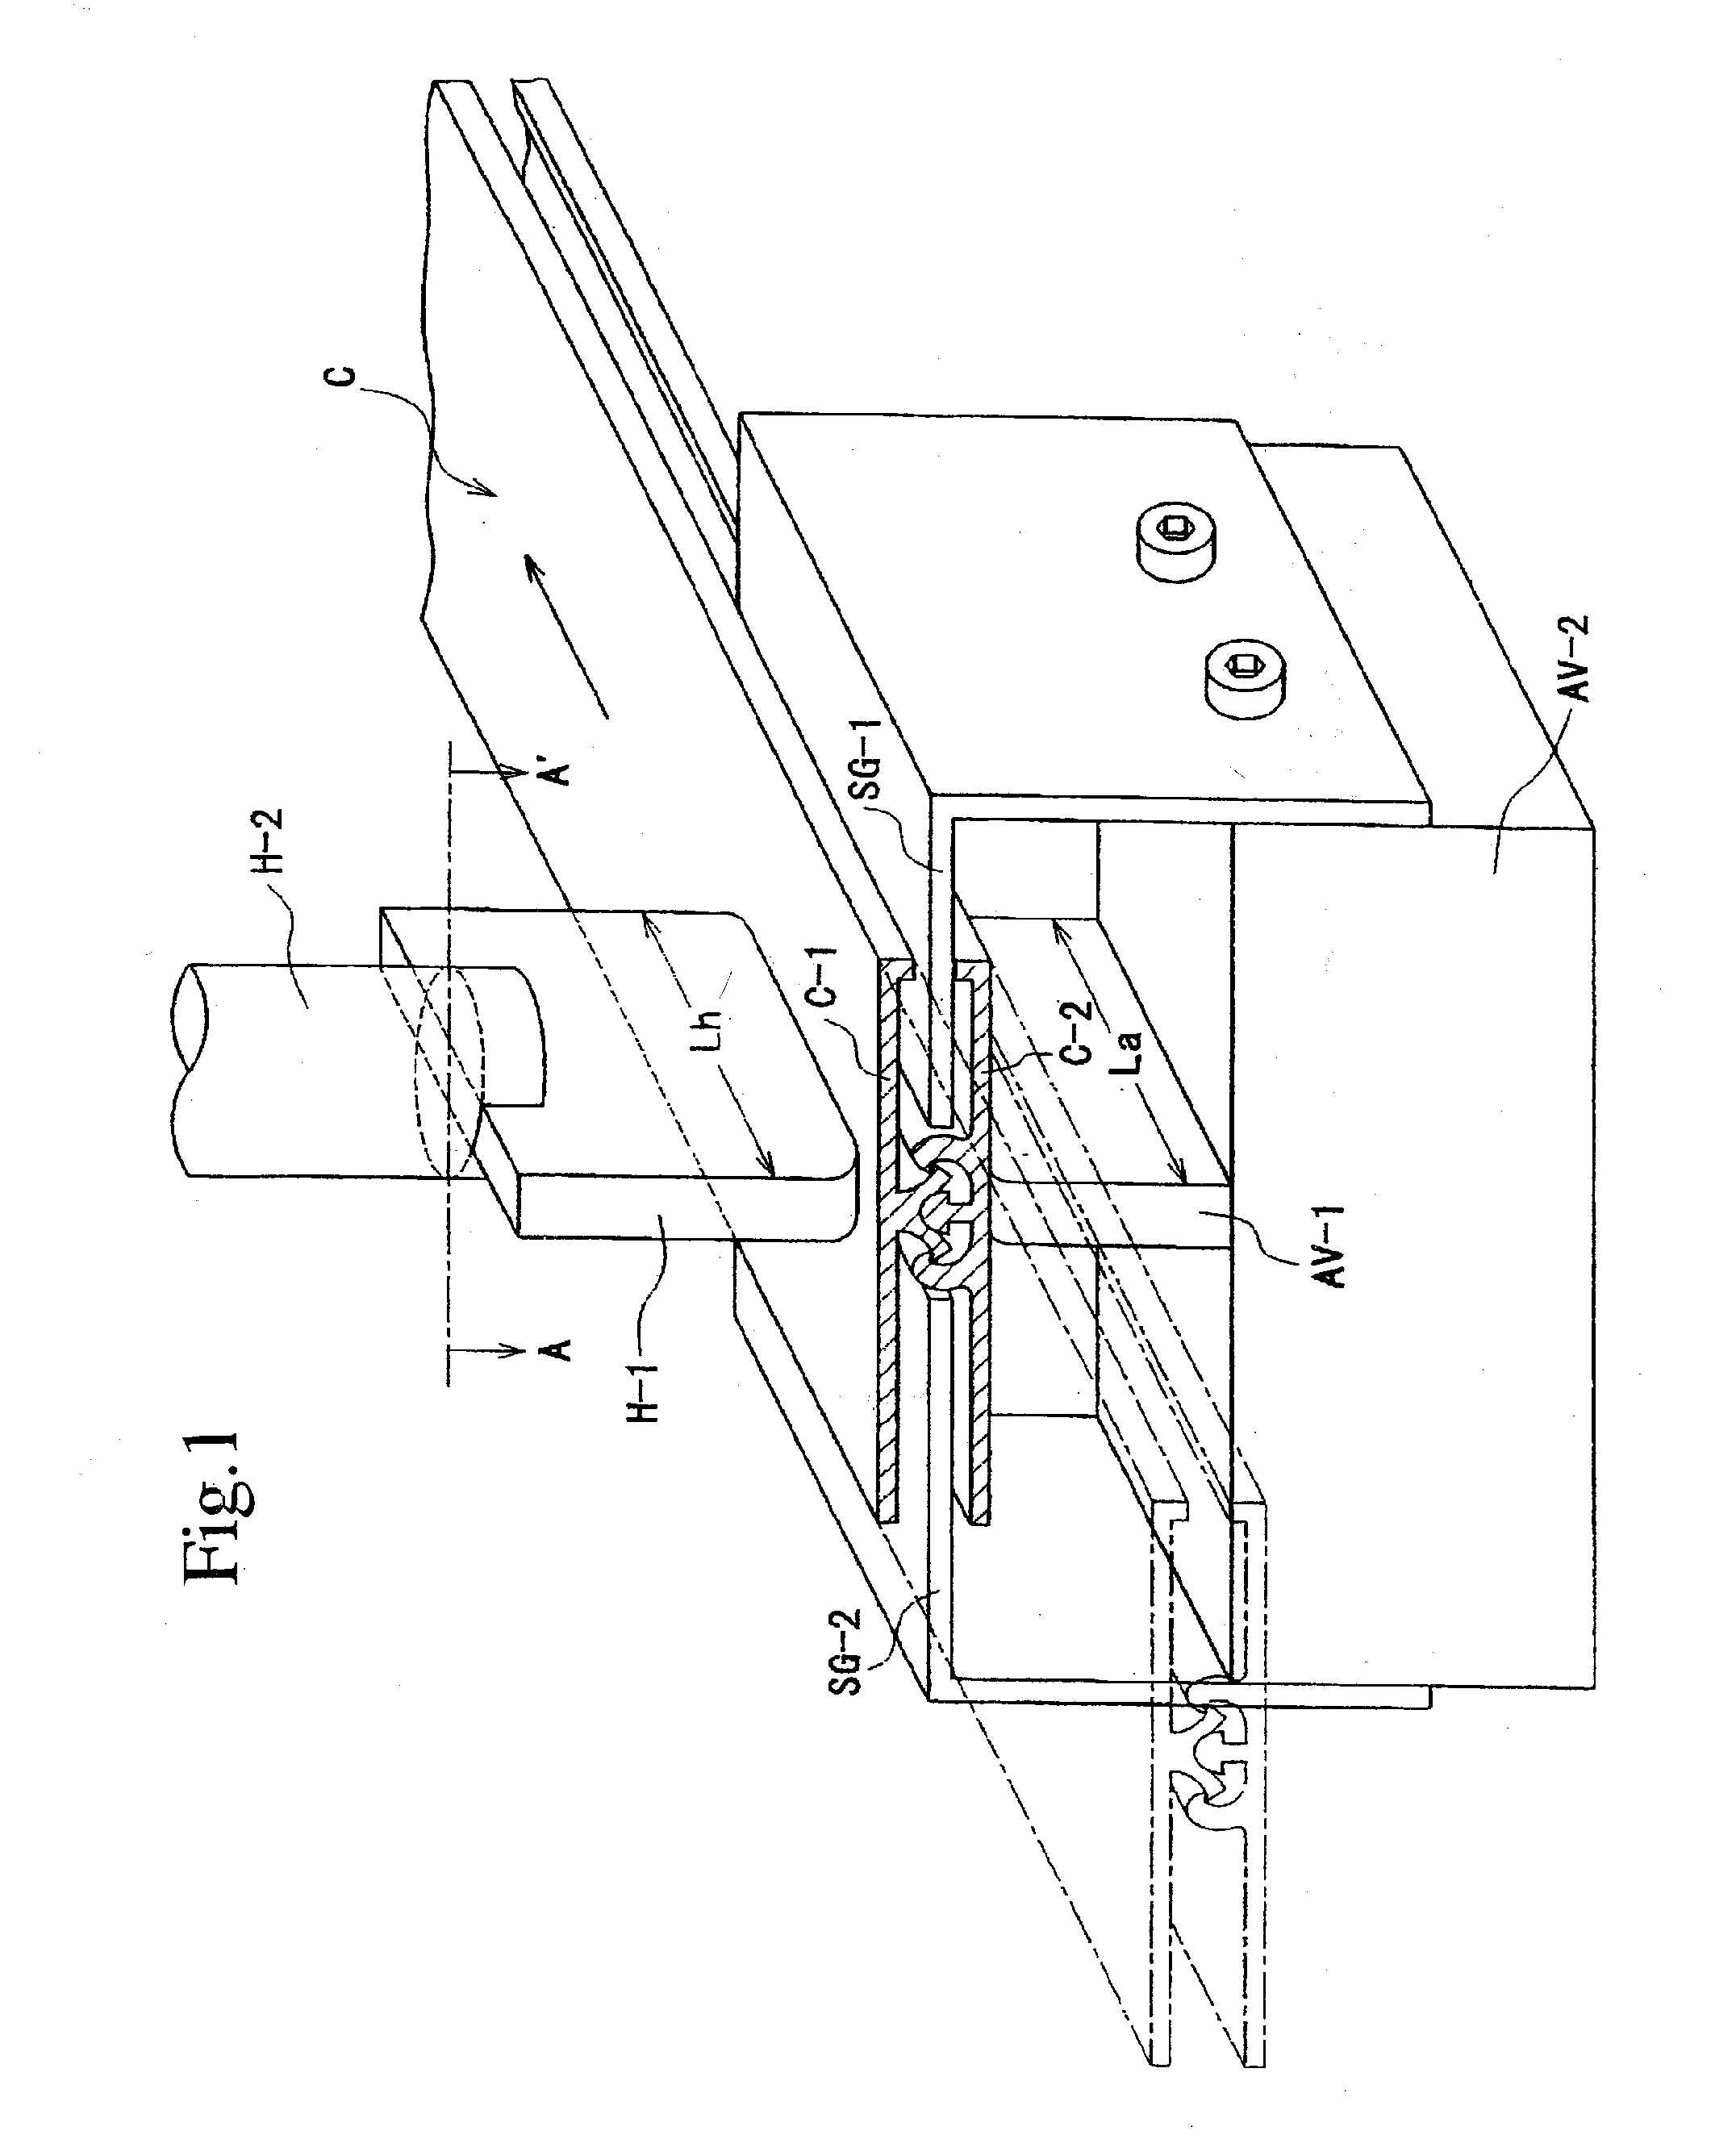 Method for producing a hermetic plastic zipper and a hermetic plastic zipper